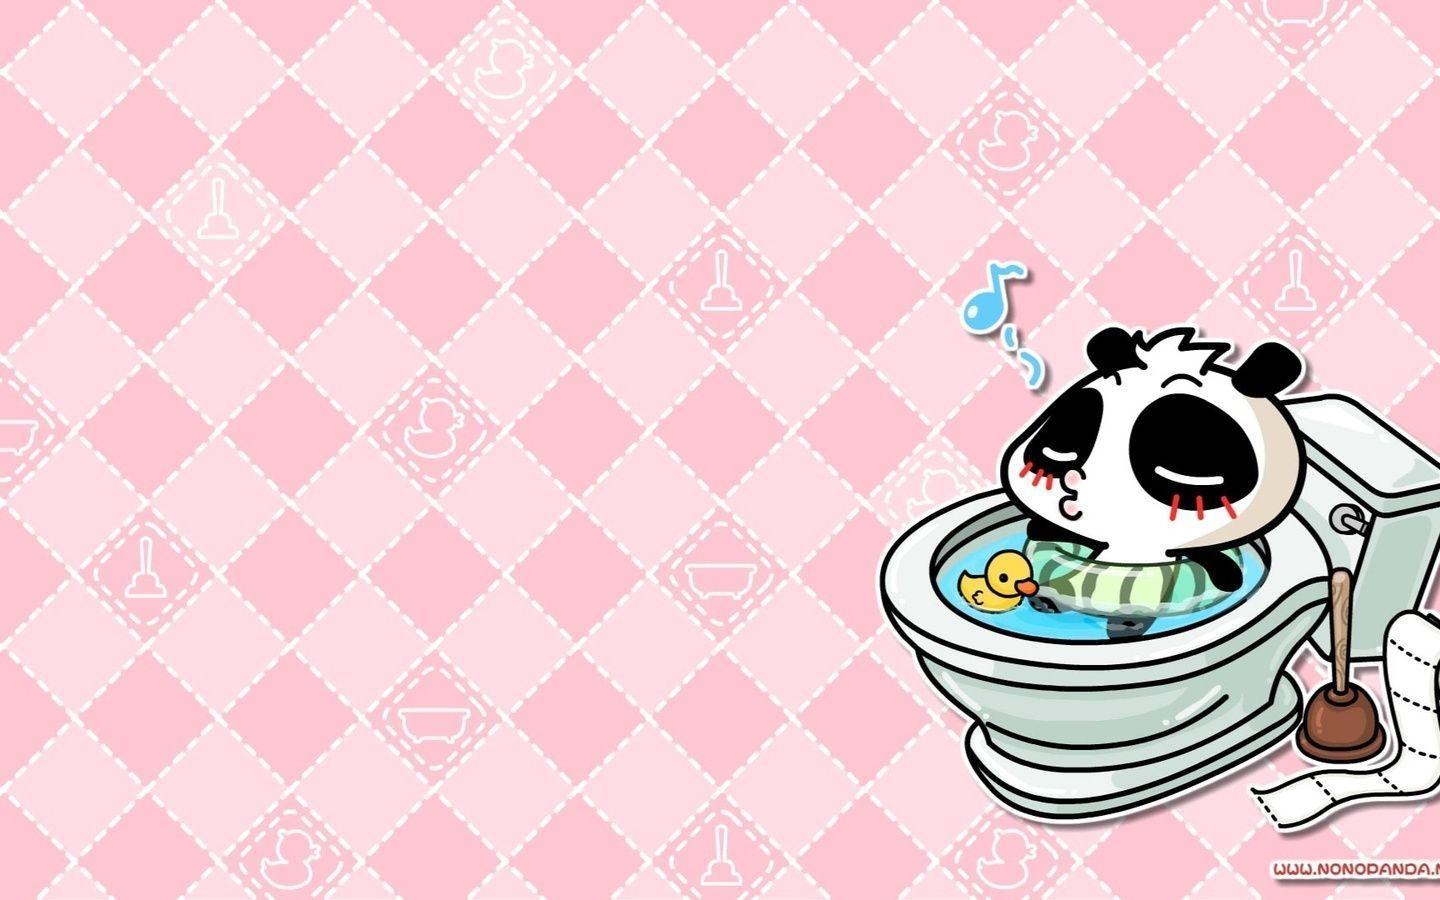 Cute Panda Cartoon Wallpaper HD Image & Picture